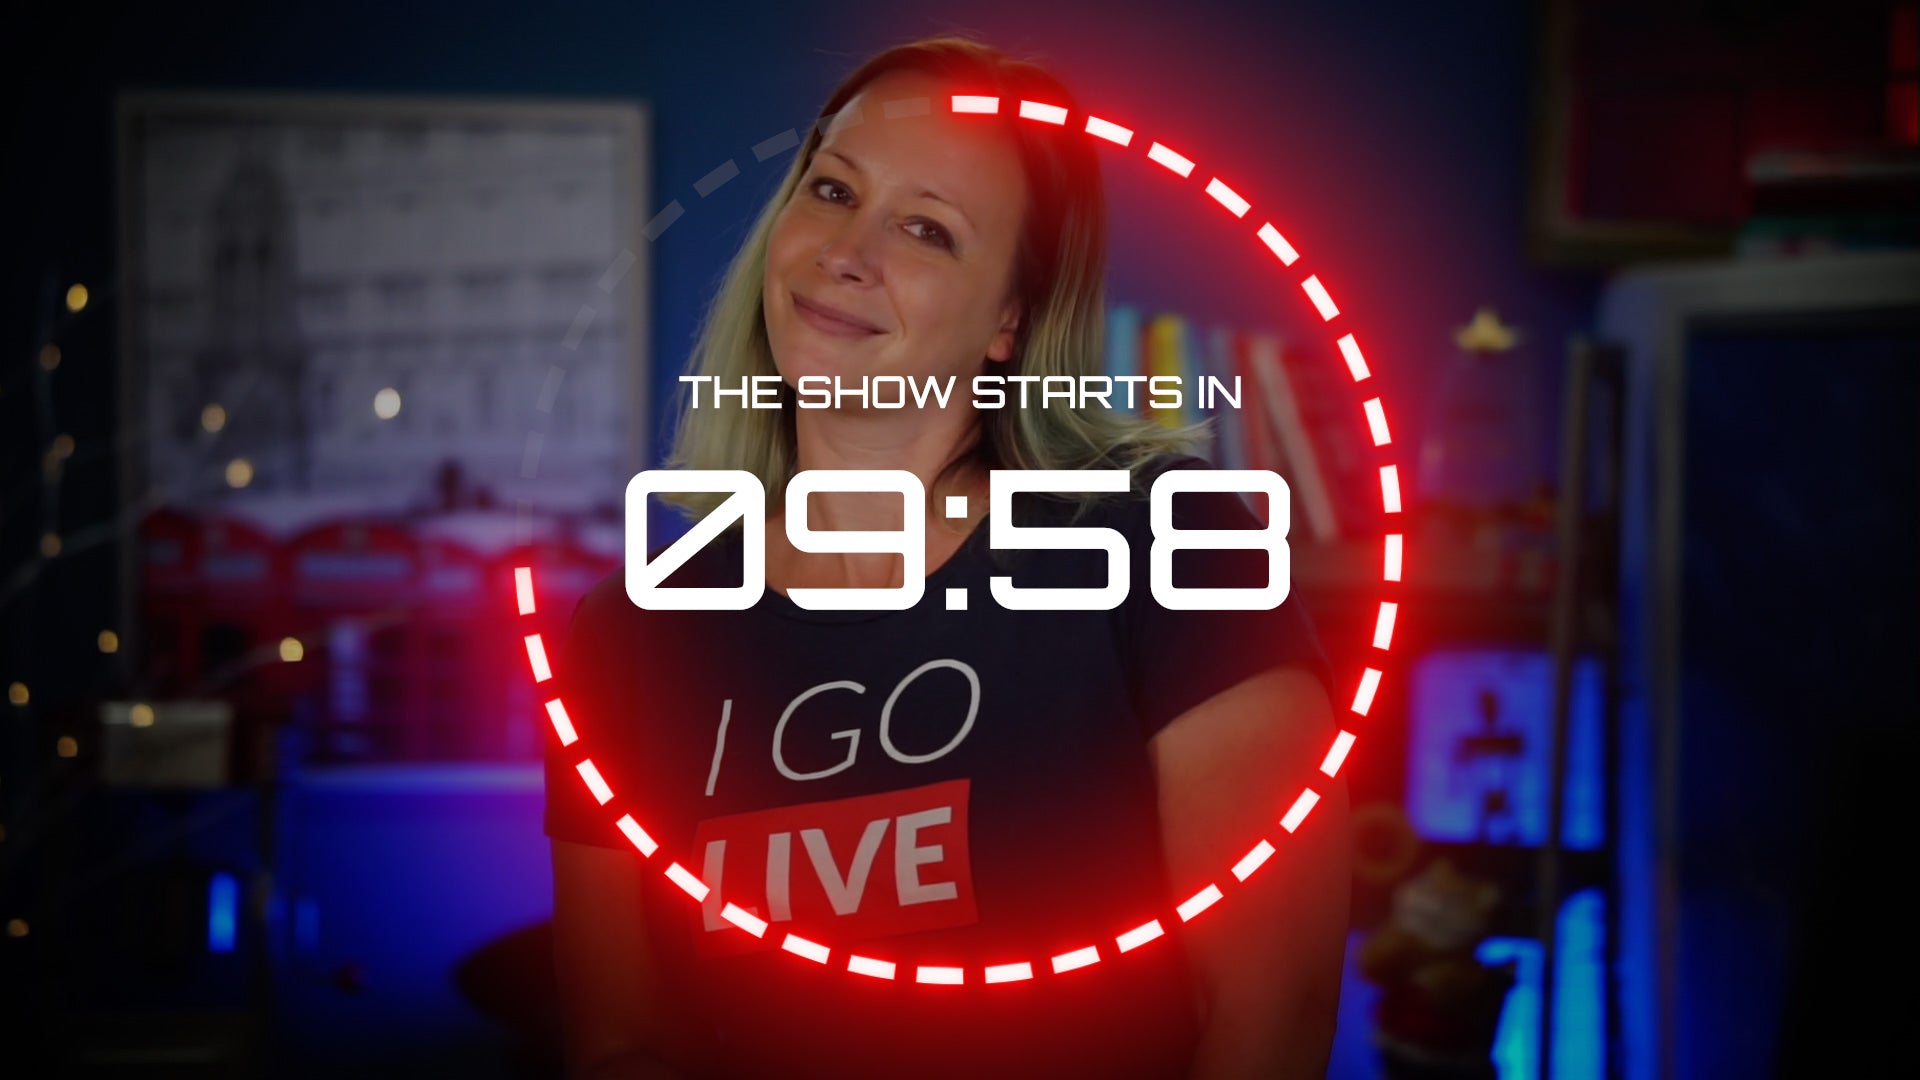 How to Set Up a Livestream Countdown Timer